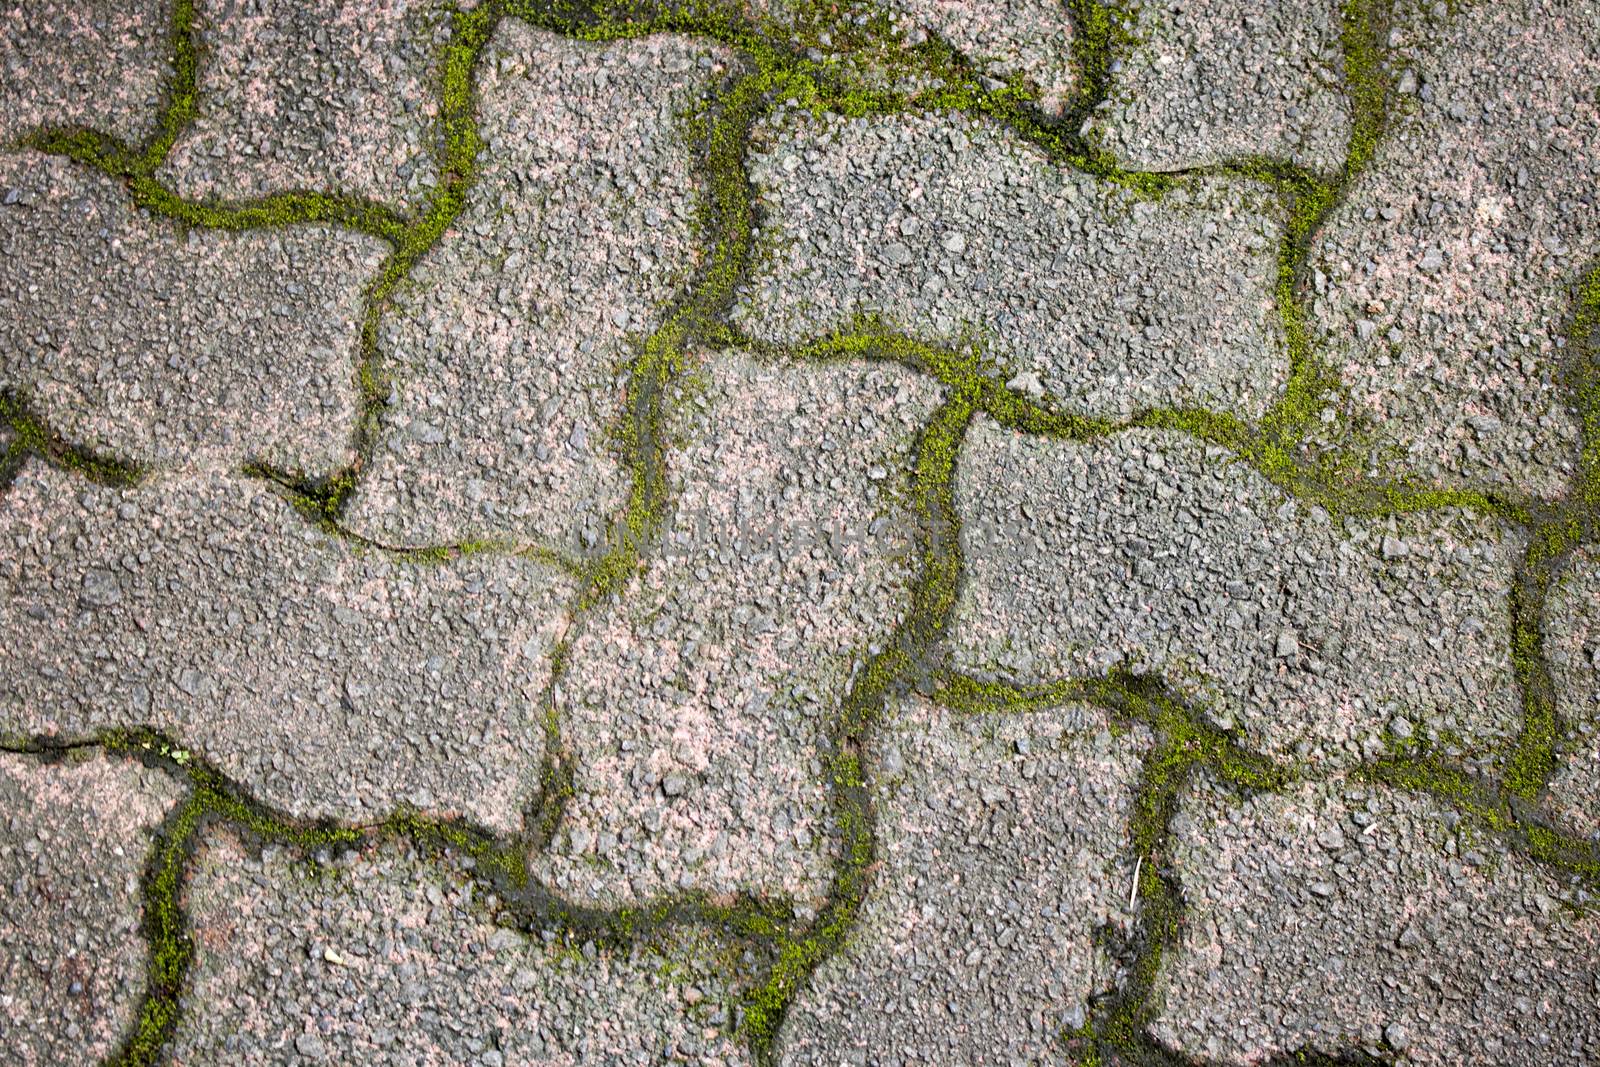 Grass Stone Floor texture pavement design with moss